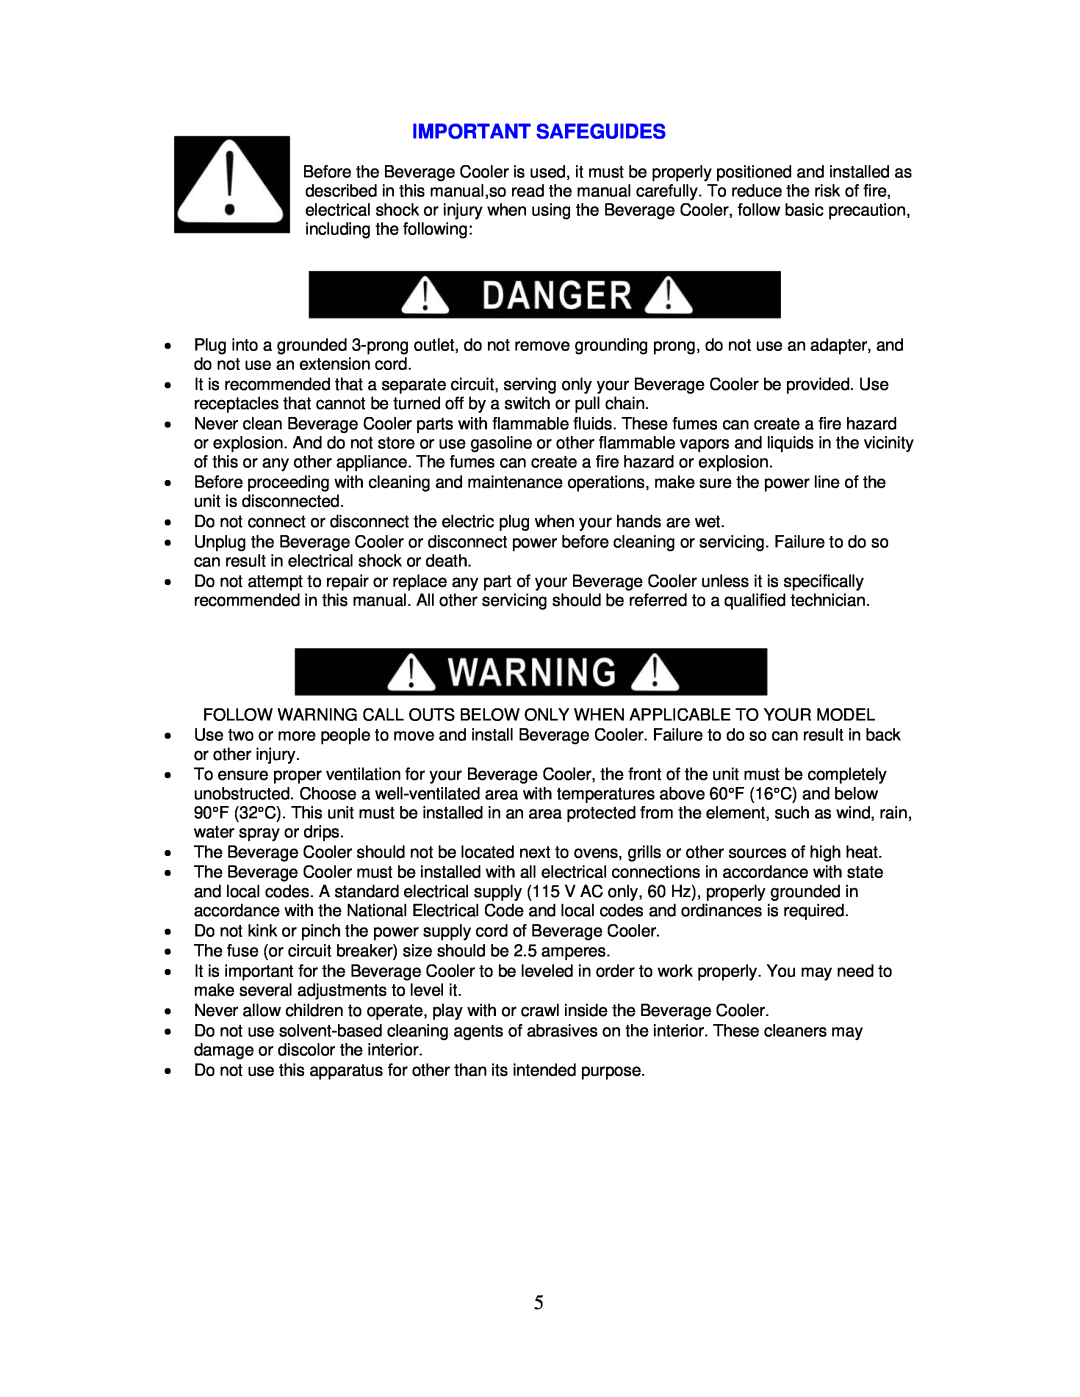 Avanti SBCA017G instruction manual Important Safeguides 